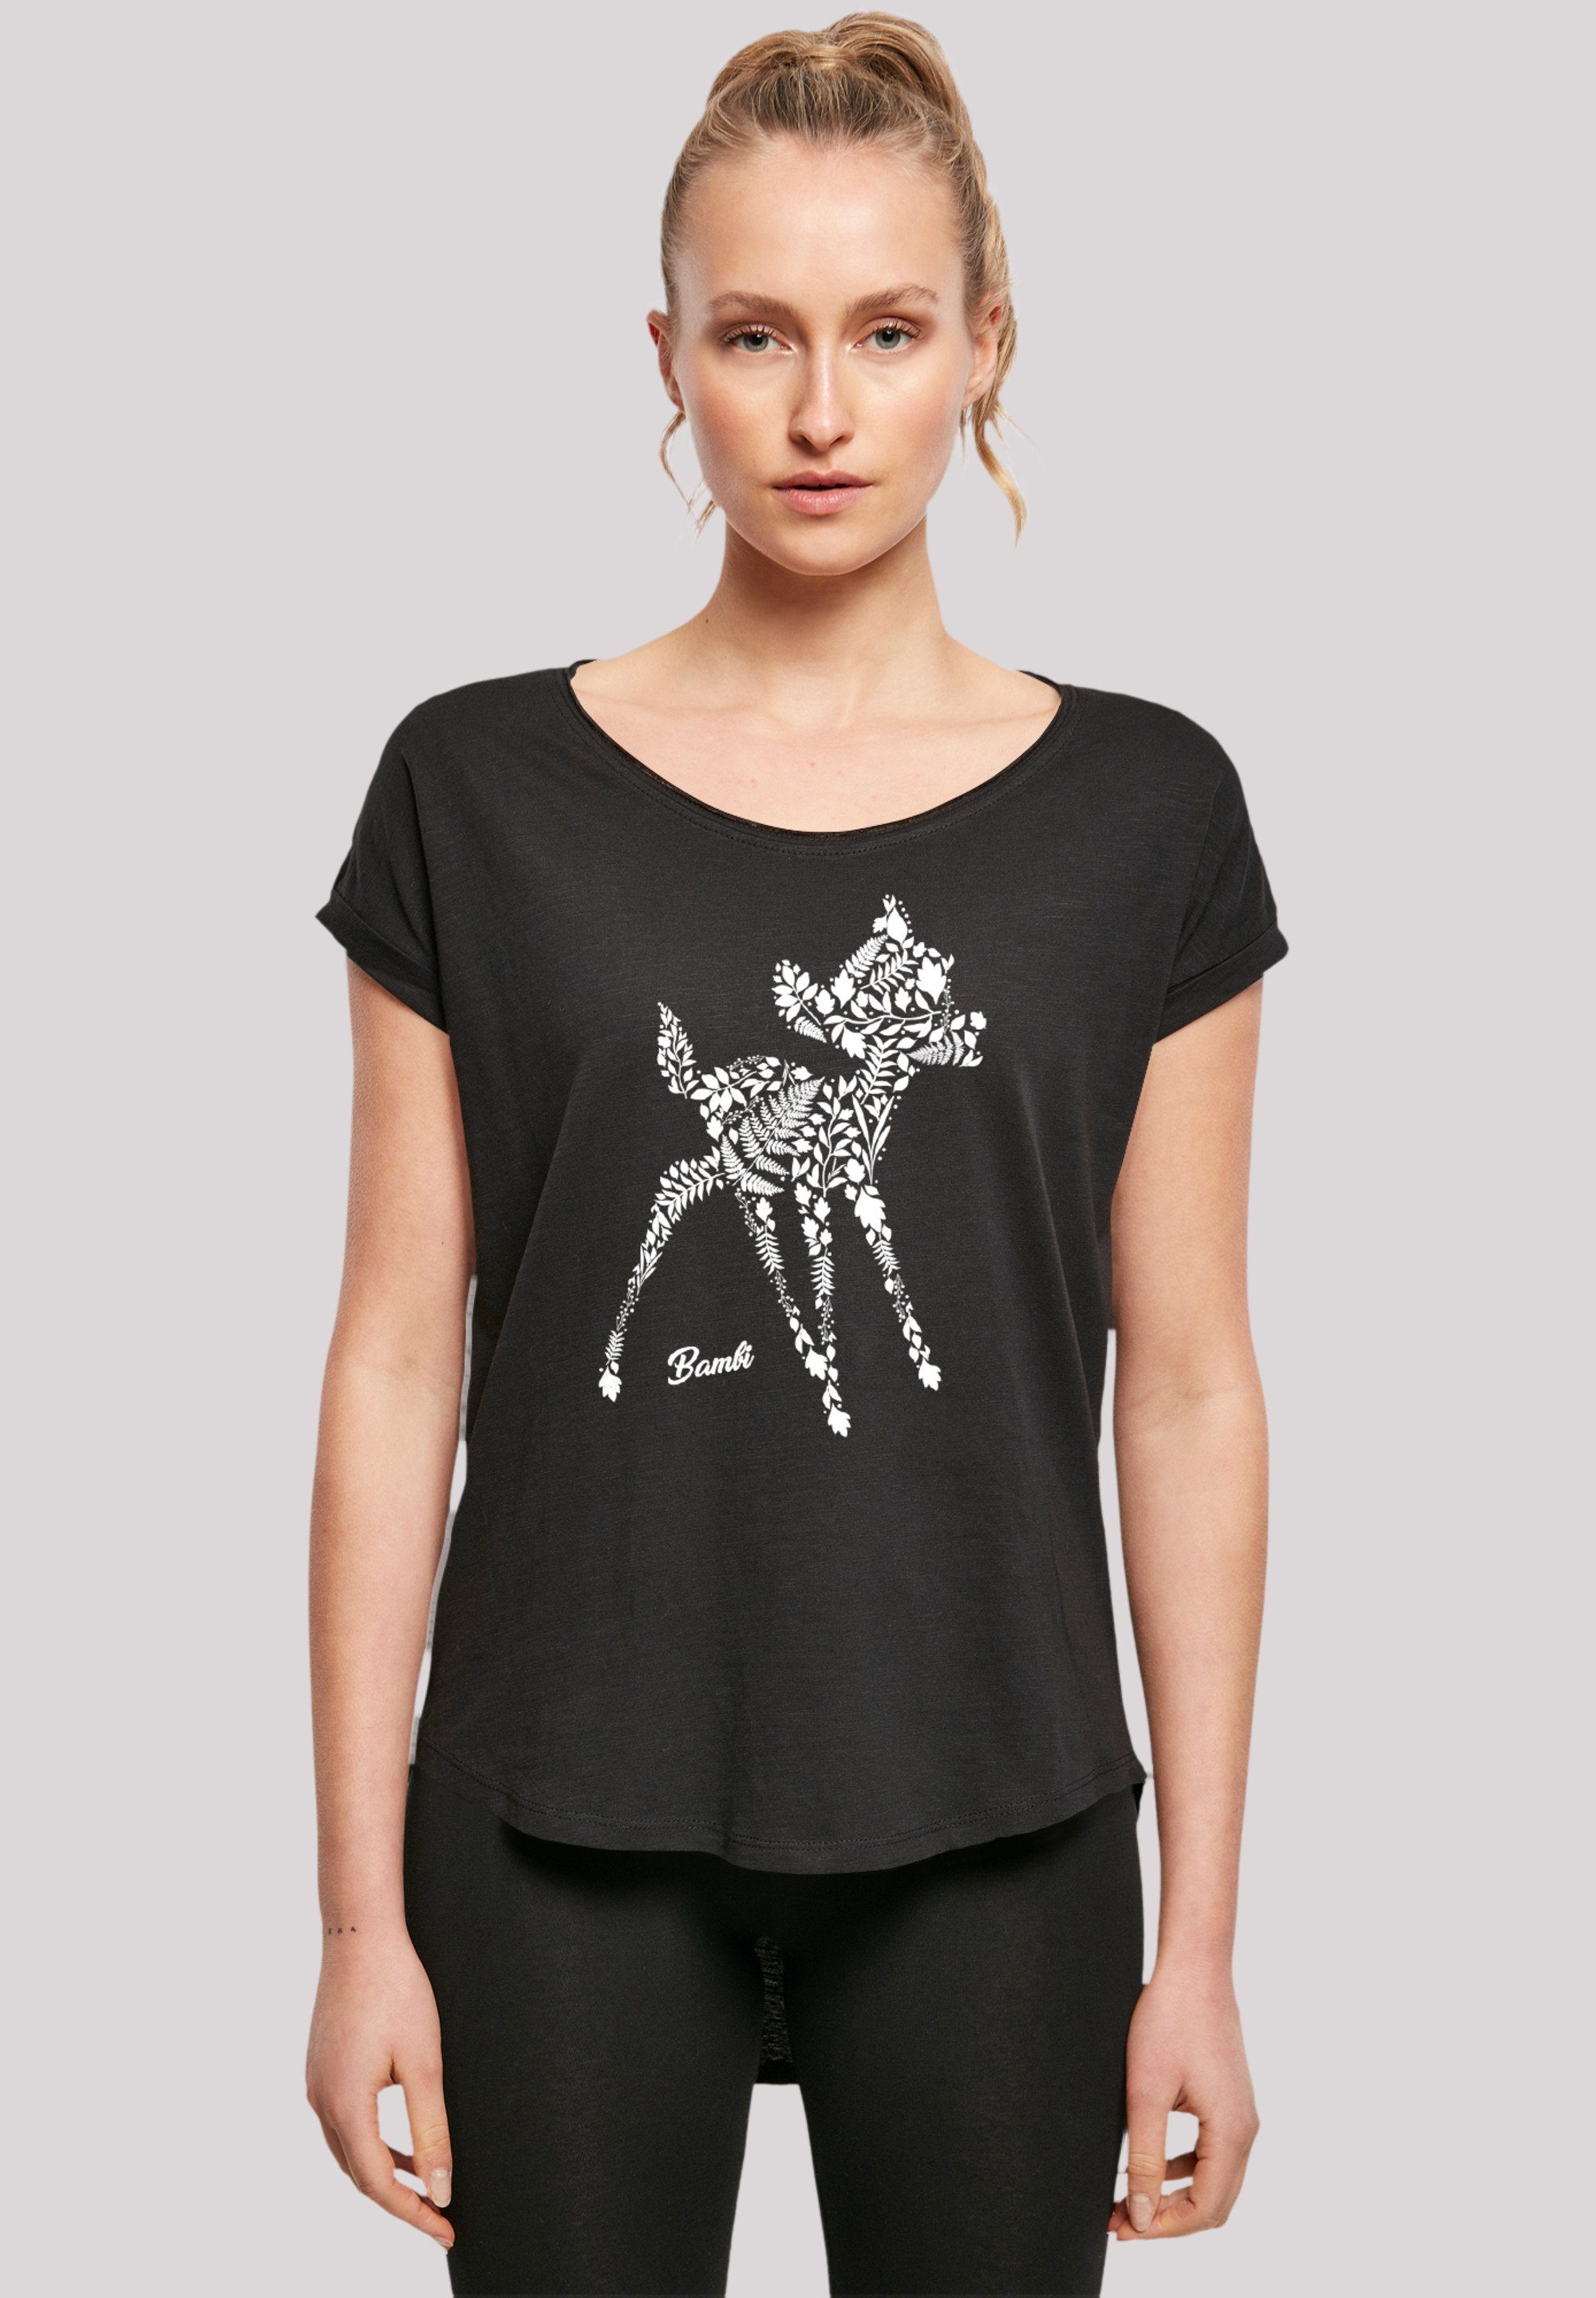 F4NT4STIC T-Shirt Disney Qualität Botanica Premium Bambi